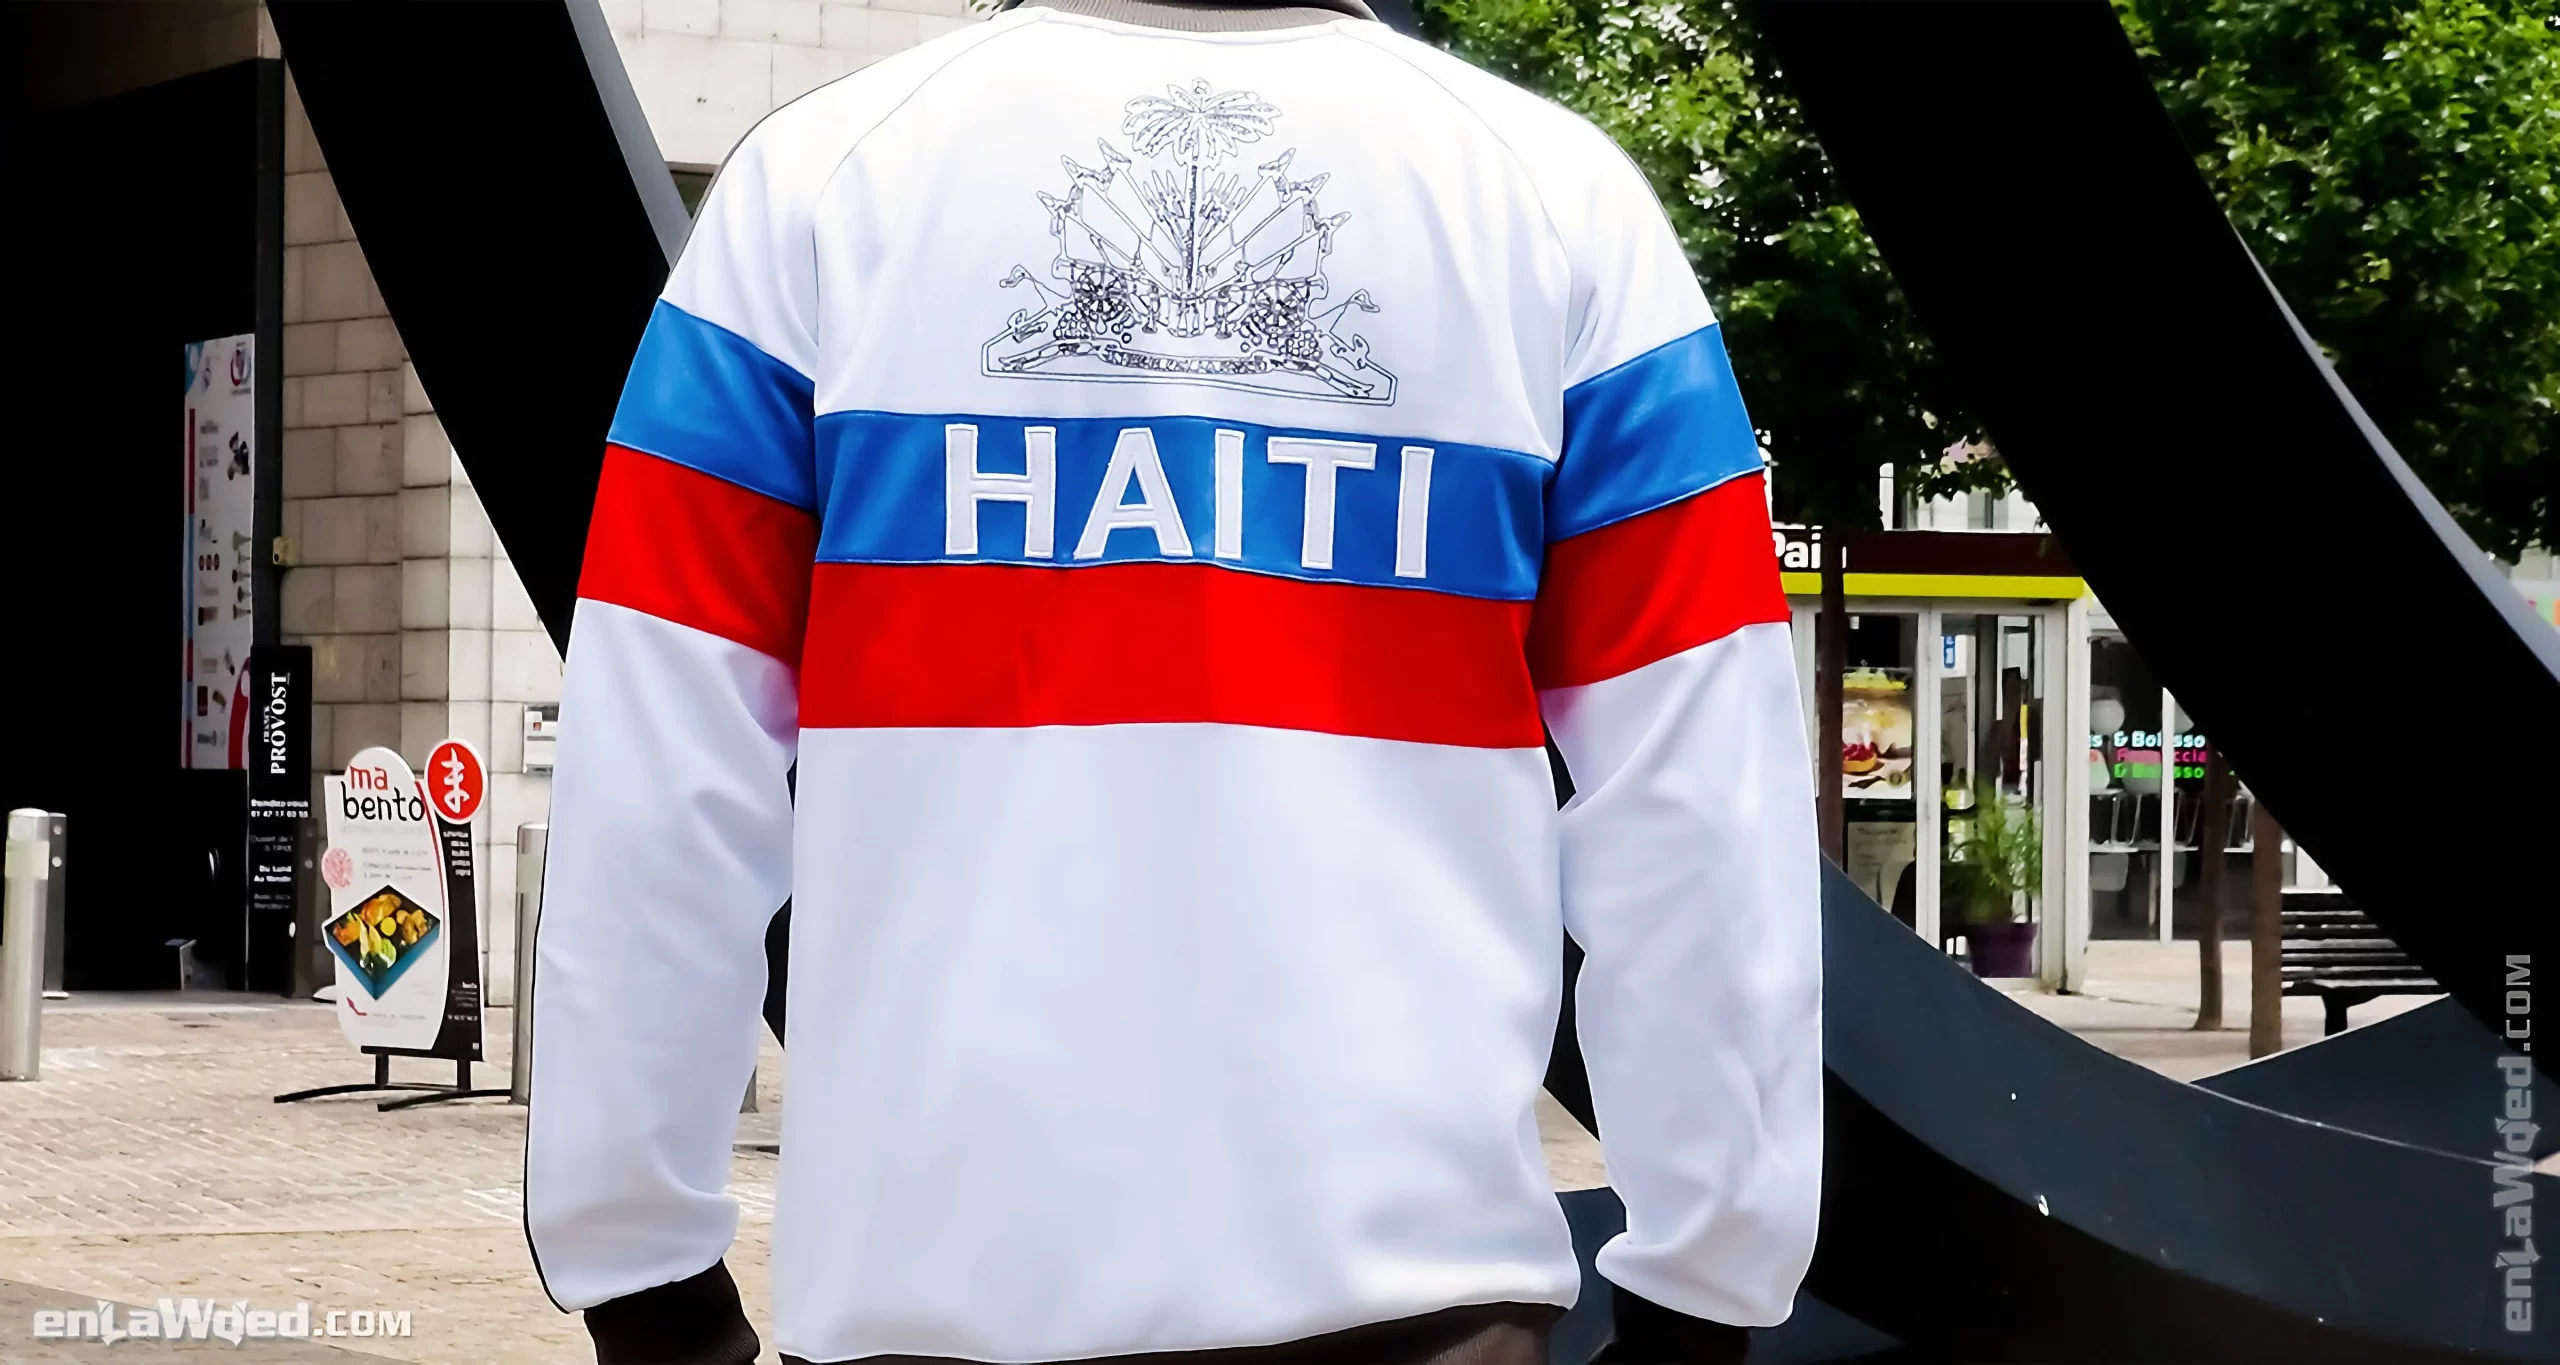 Men’s 2010 Haiti Track Top by Adidas Originals: Radiant (EnLawded.com file #lmchk90073ip2y121746kg9st)